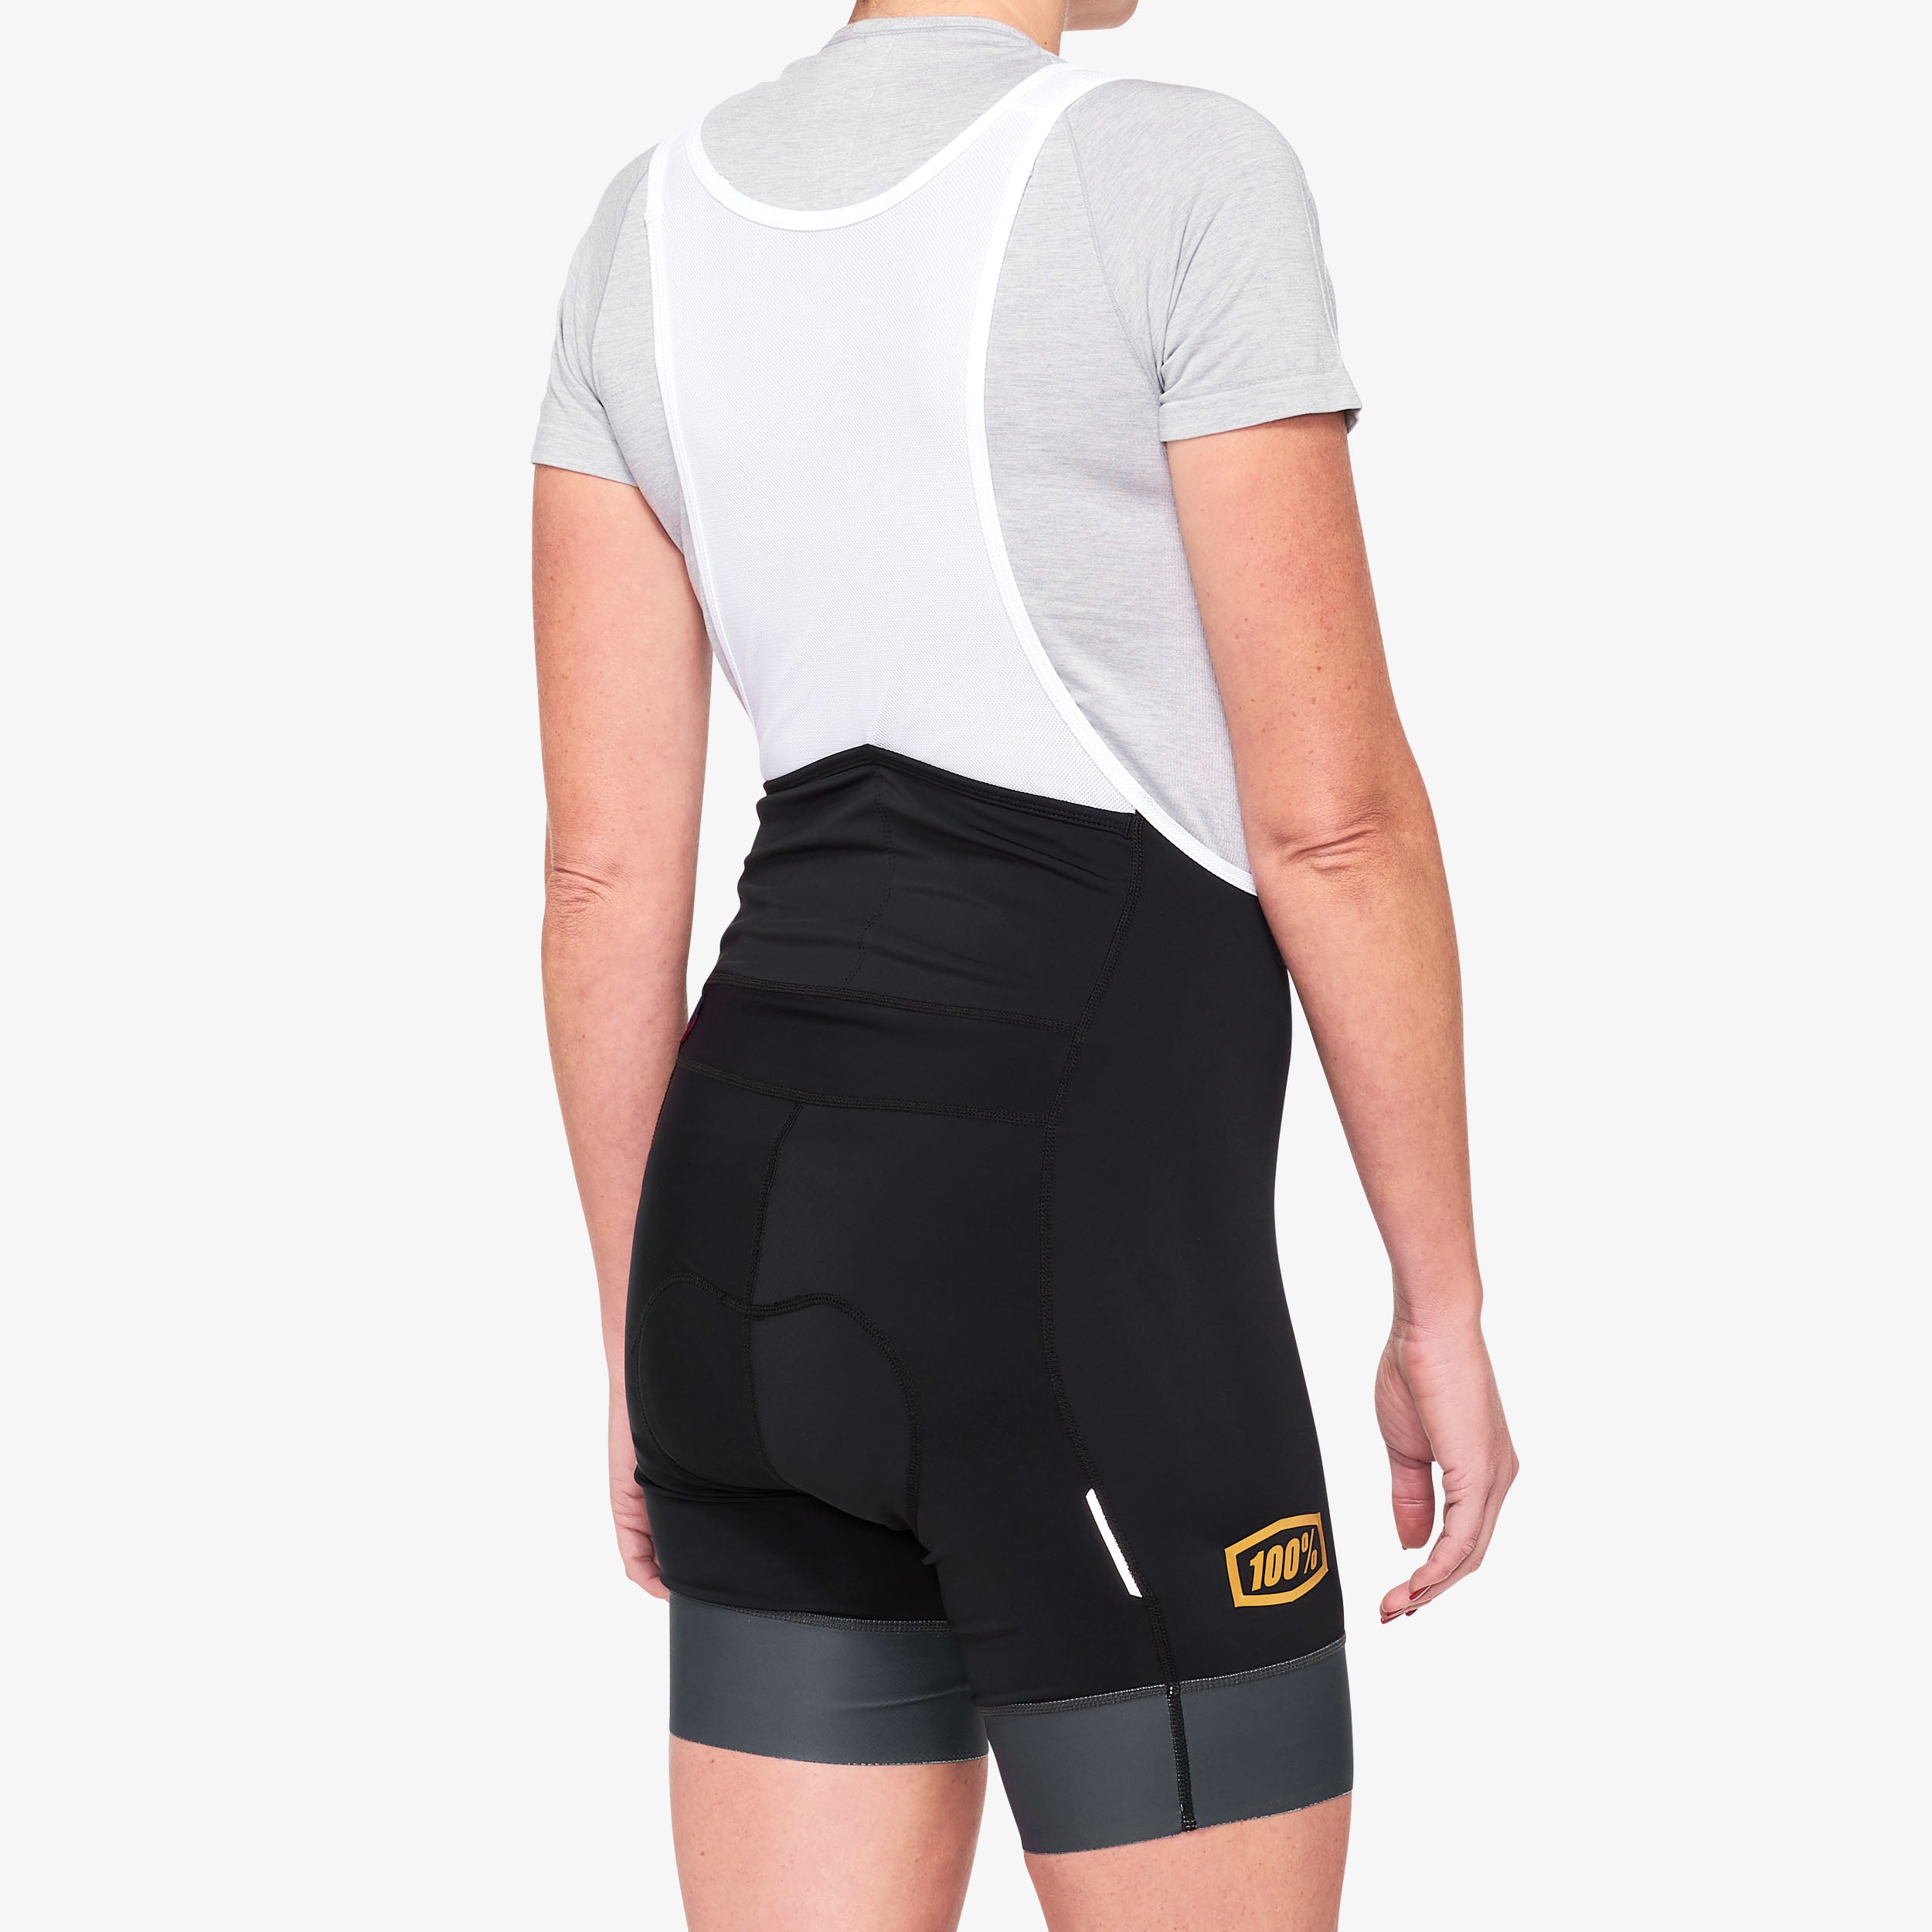 EXCEEDA Women's Black/Charcoal Bib Shorts